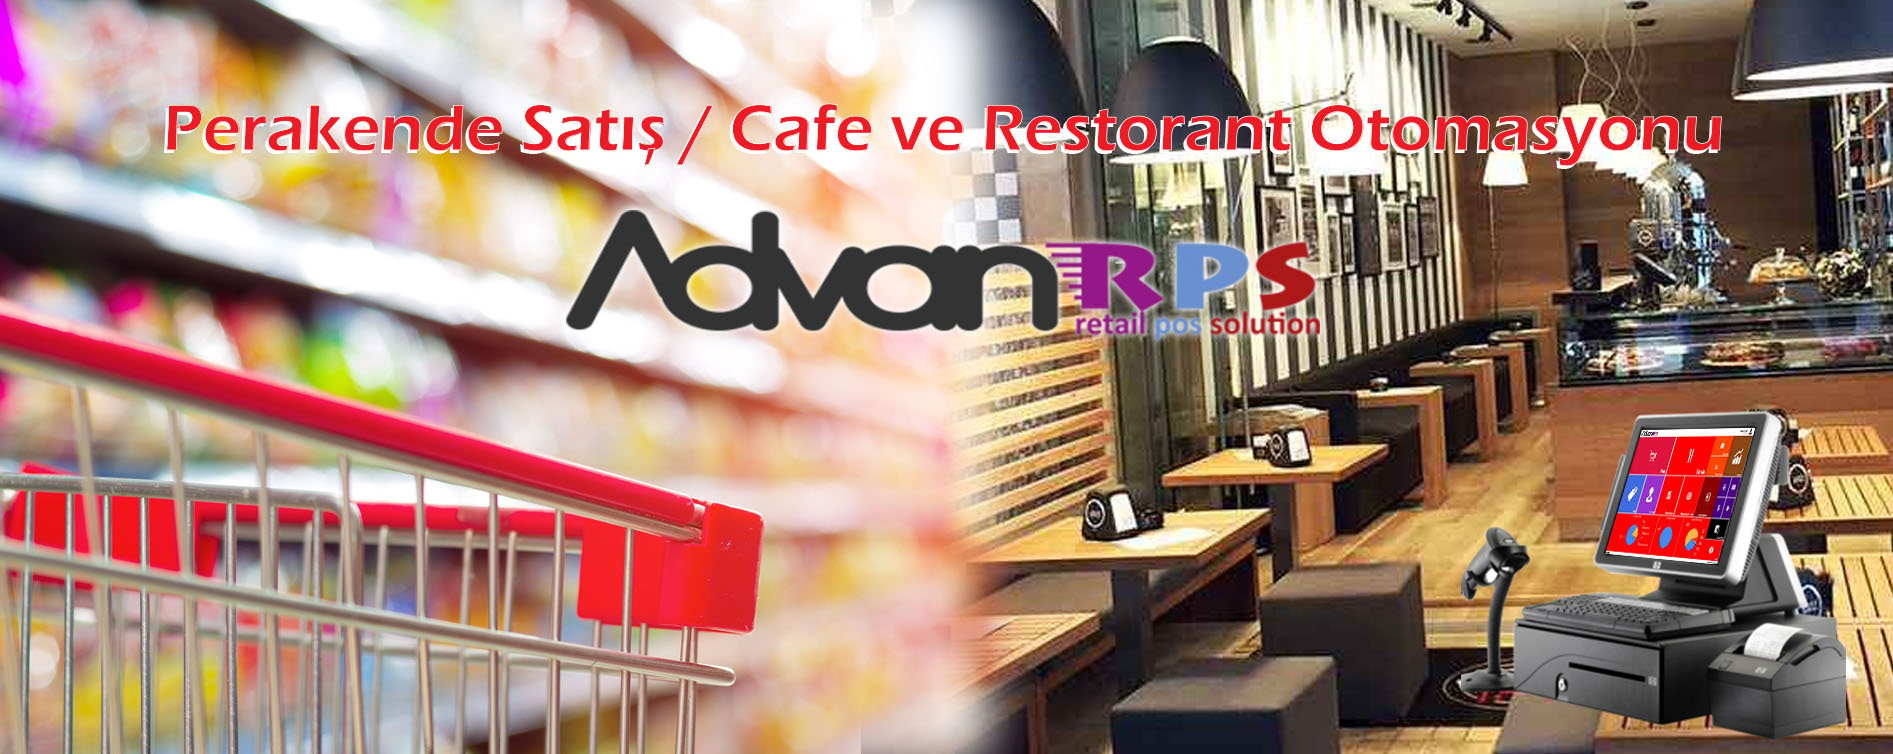 Advan RPS Market ve Restorant Yazılımı